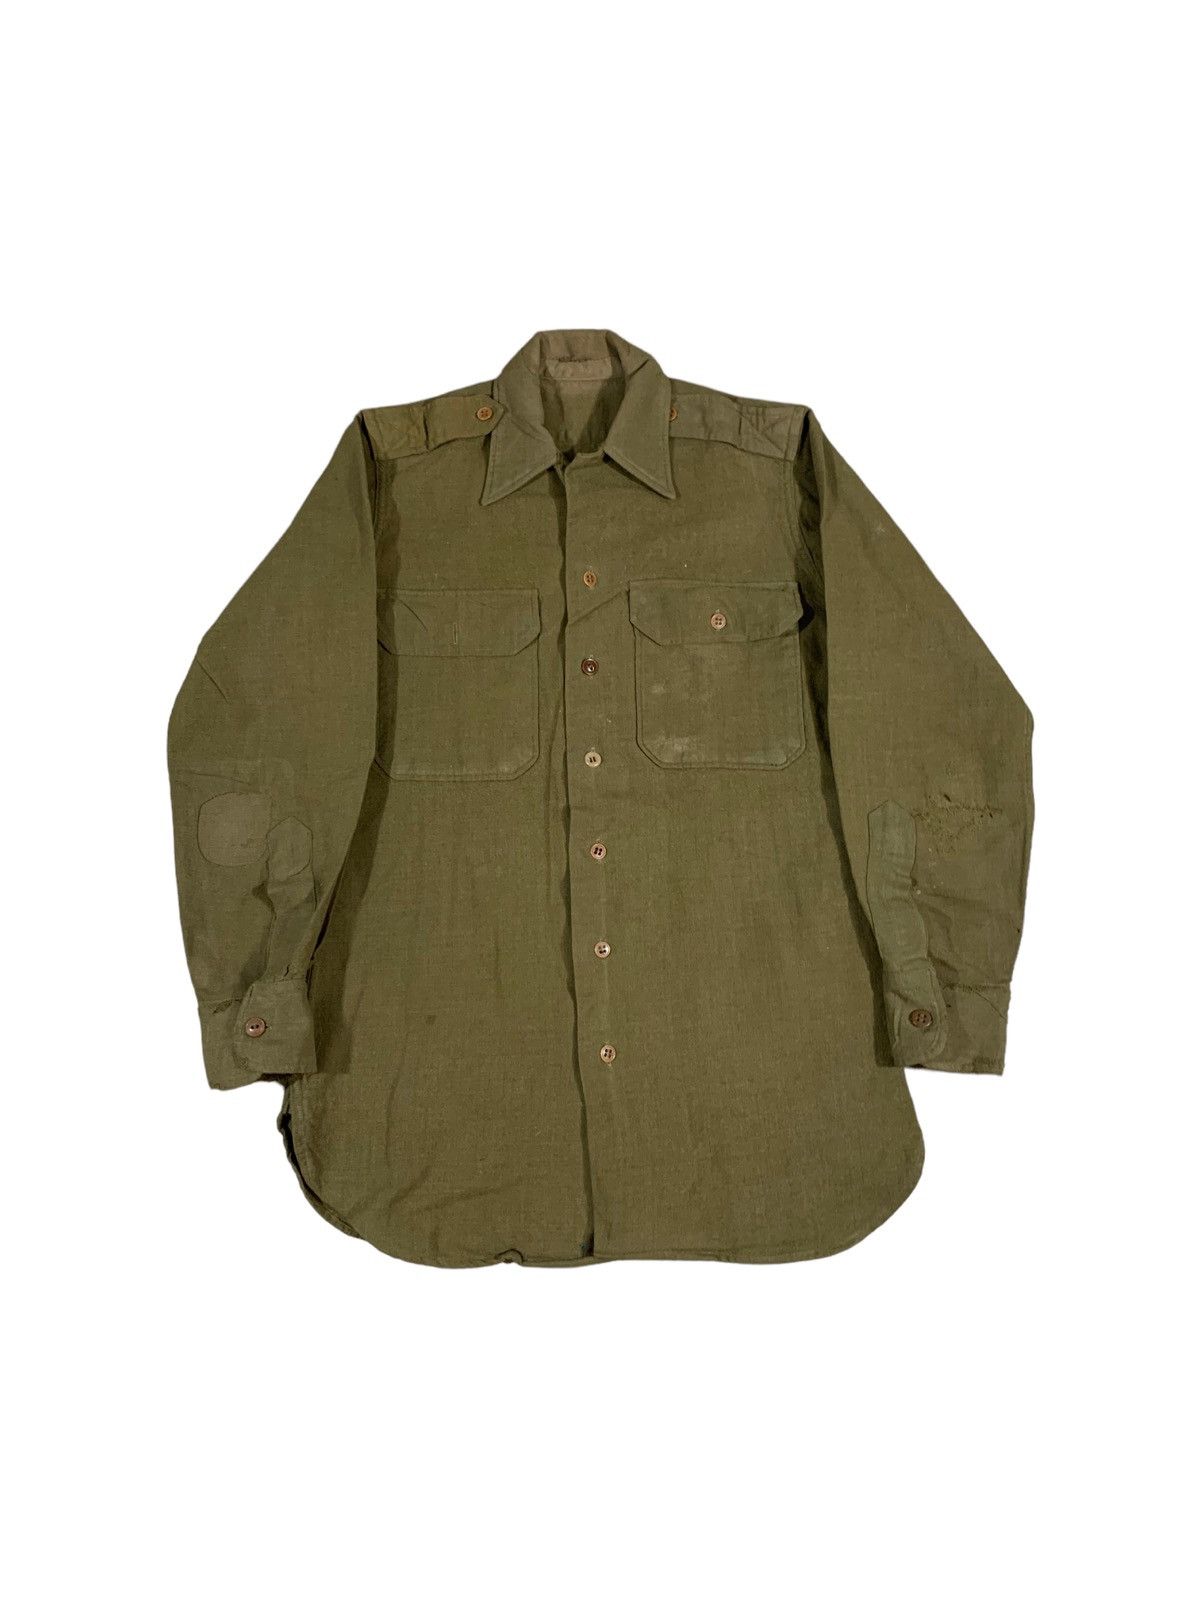 Vintage Vintage WW2 US Military Wool Shirt Size US M / EU 48-50 / 2 - 1 Preview